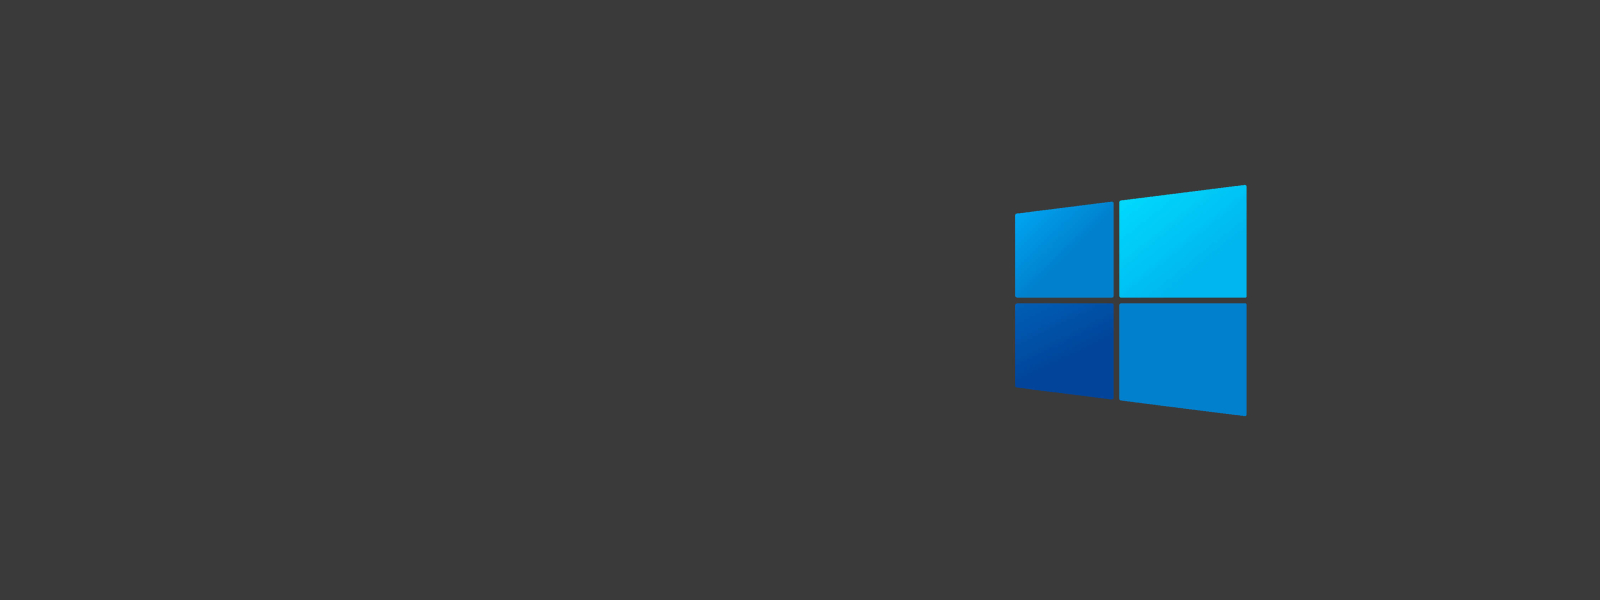 1600x600 Windows 10 Dark Logo Minimal 1600x600 Resolution Wallpaper, HD  Minimalist 4K Wallpapers, Images, Photos and Background - Wallpapers Den